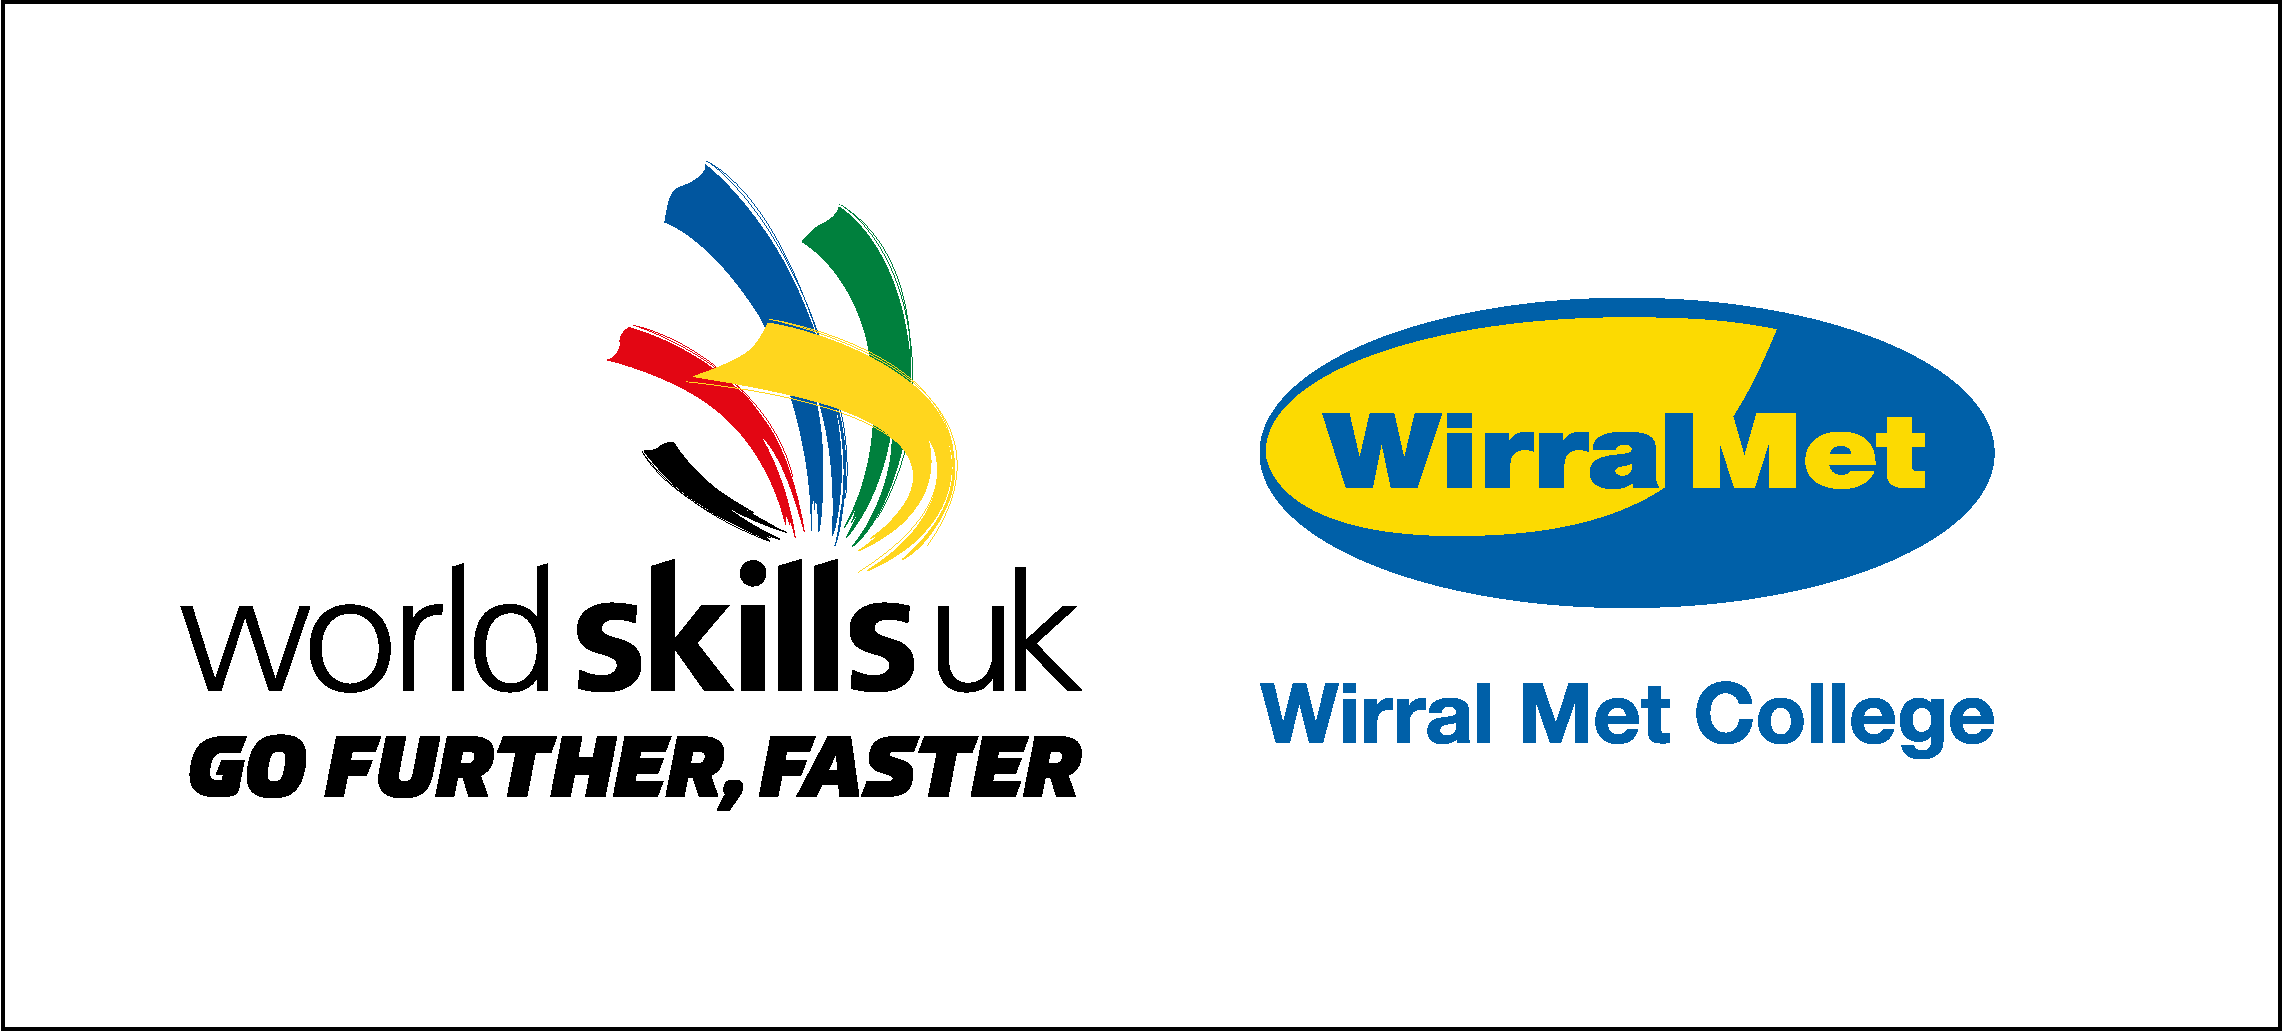 Wirral Met will host the WorldSkills Regional Heat for Engineering in June 2020